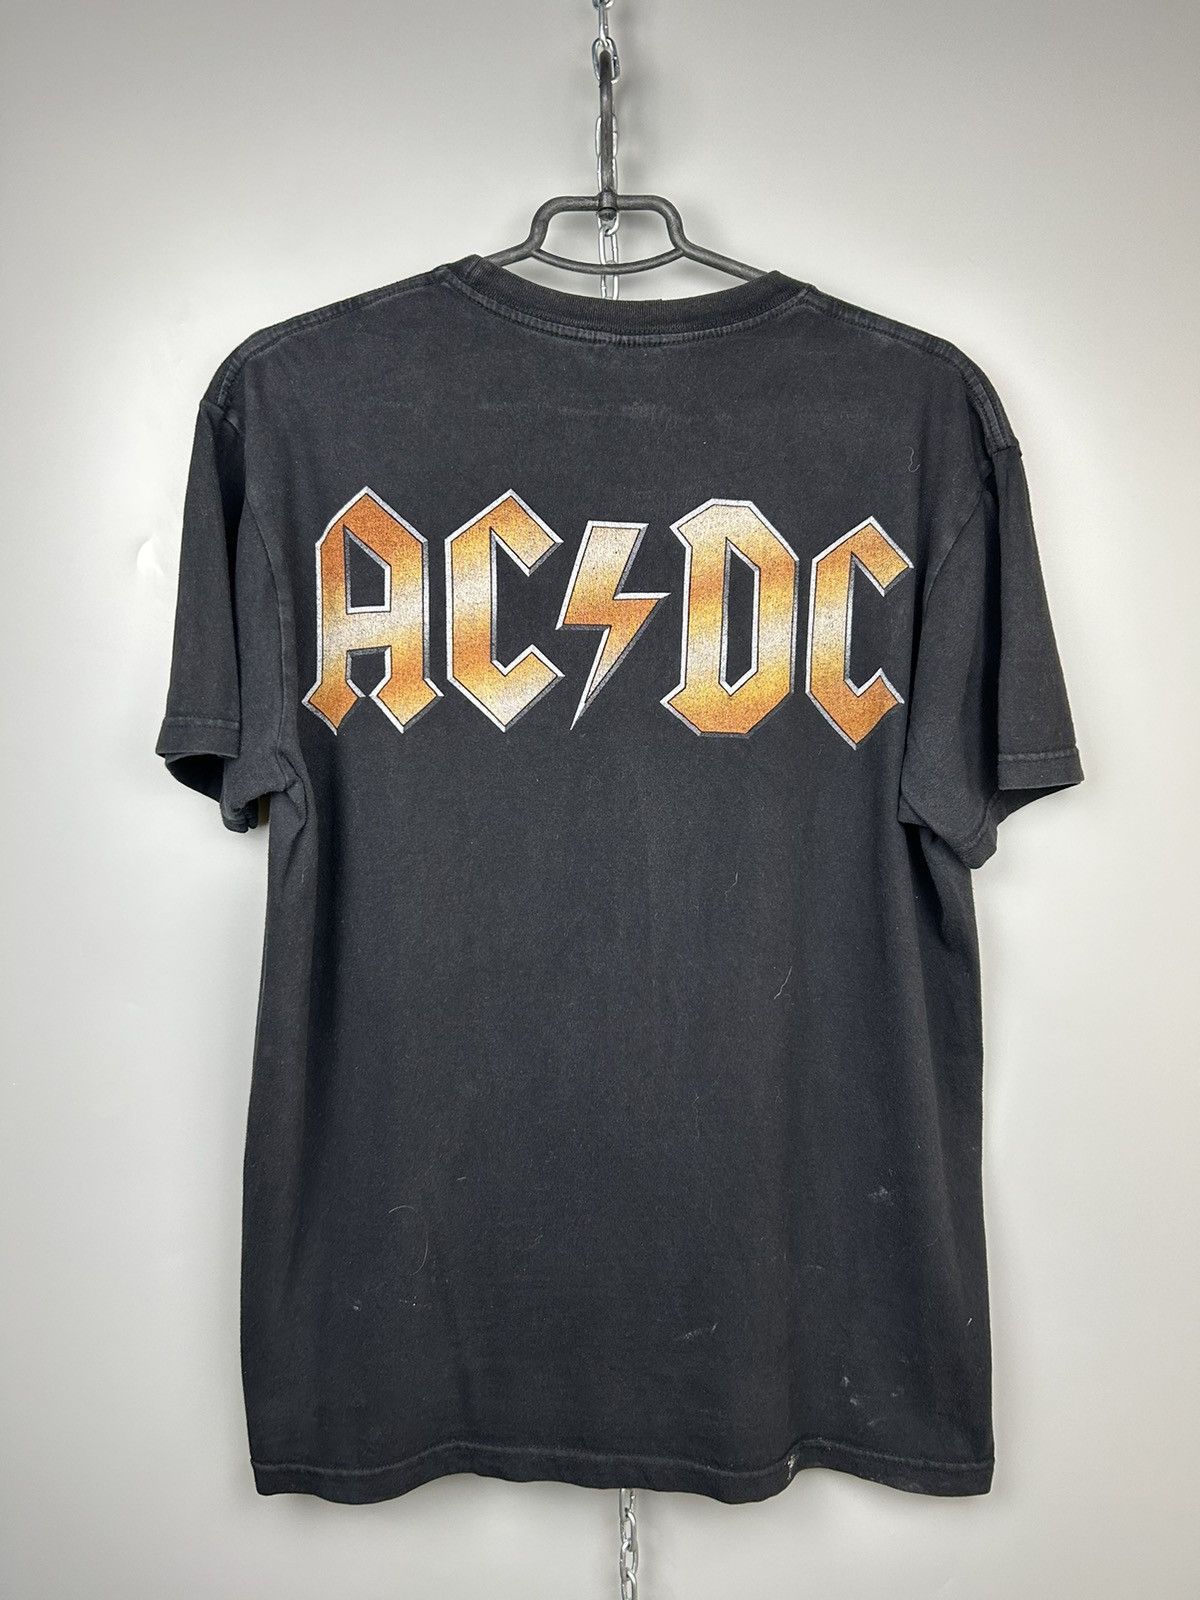 Vintage ACDC Black Ice Band Tee T shirt rare Size US L / EU 52-54 / 3 - 14 Thumbnail